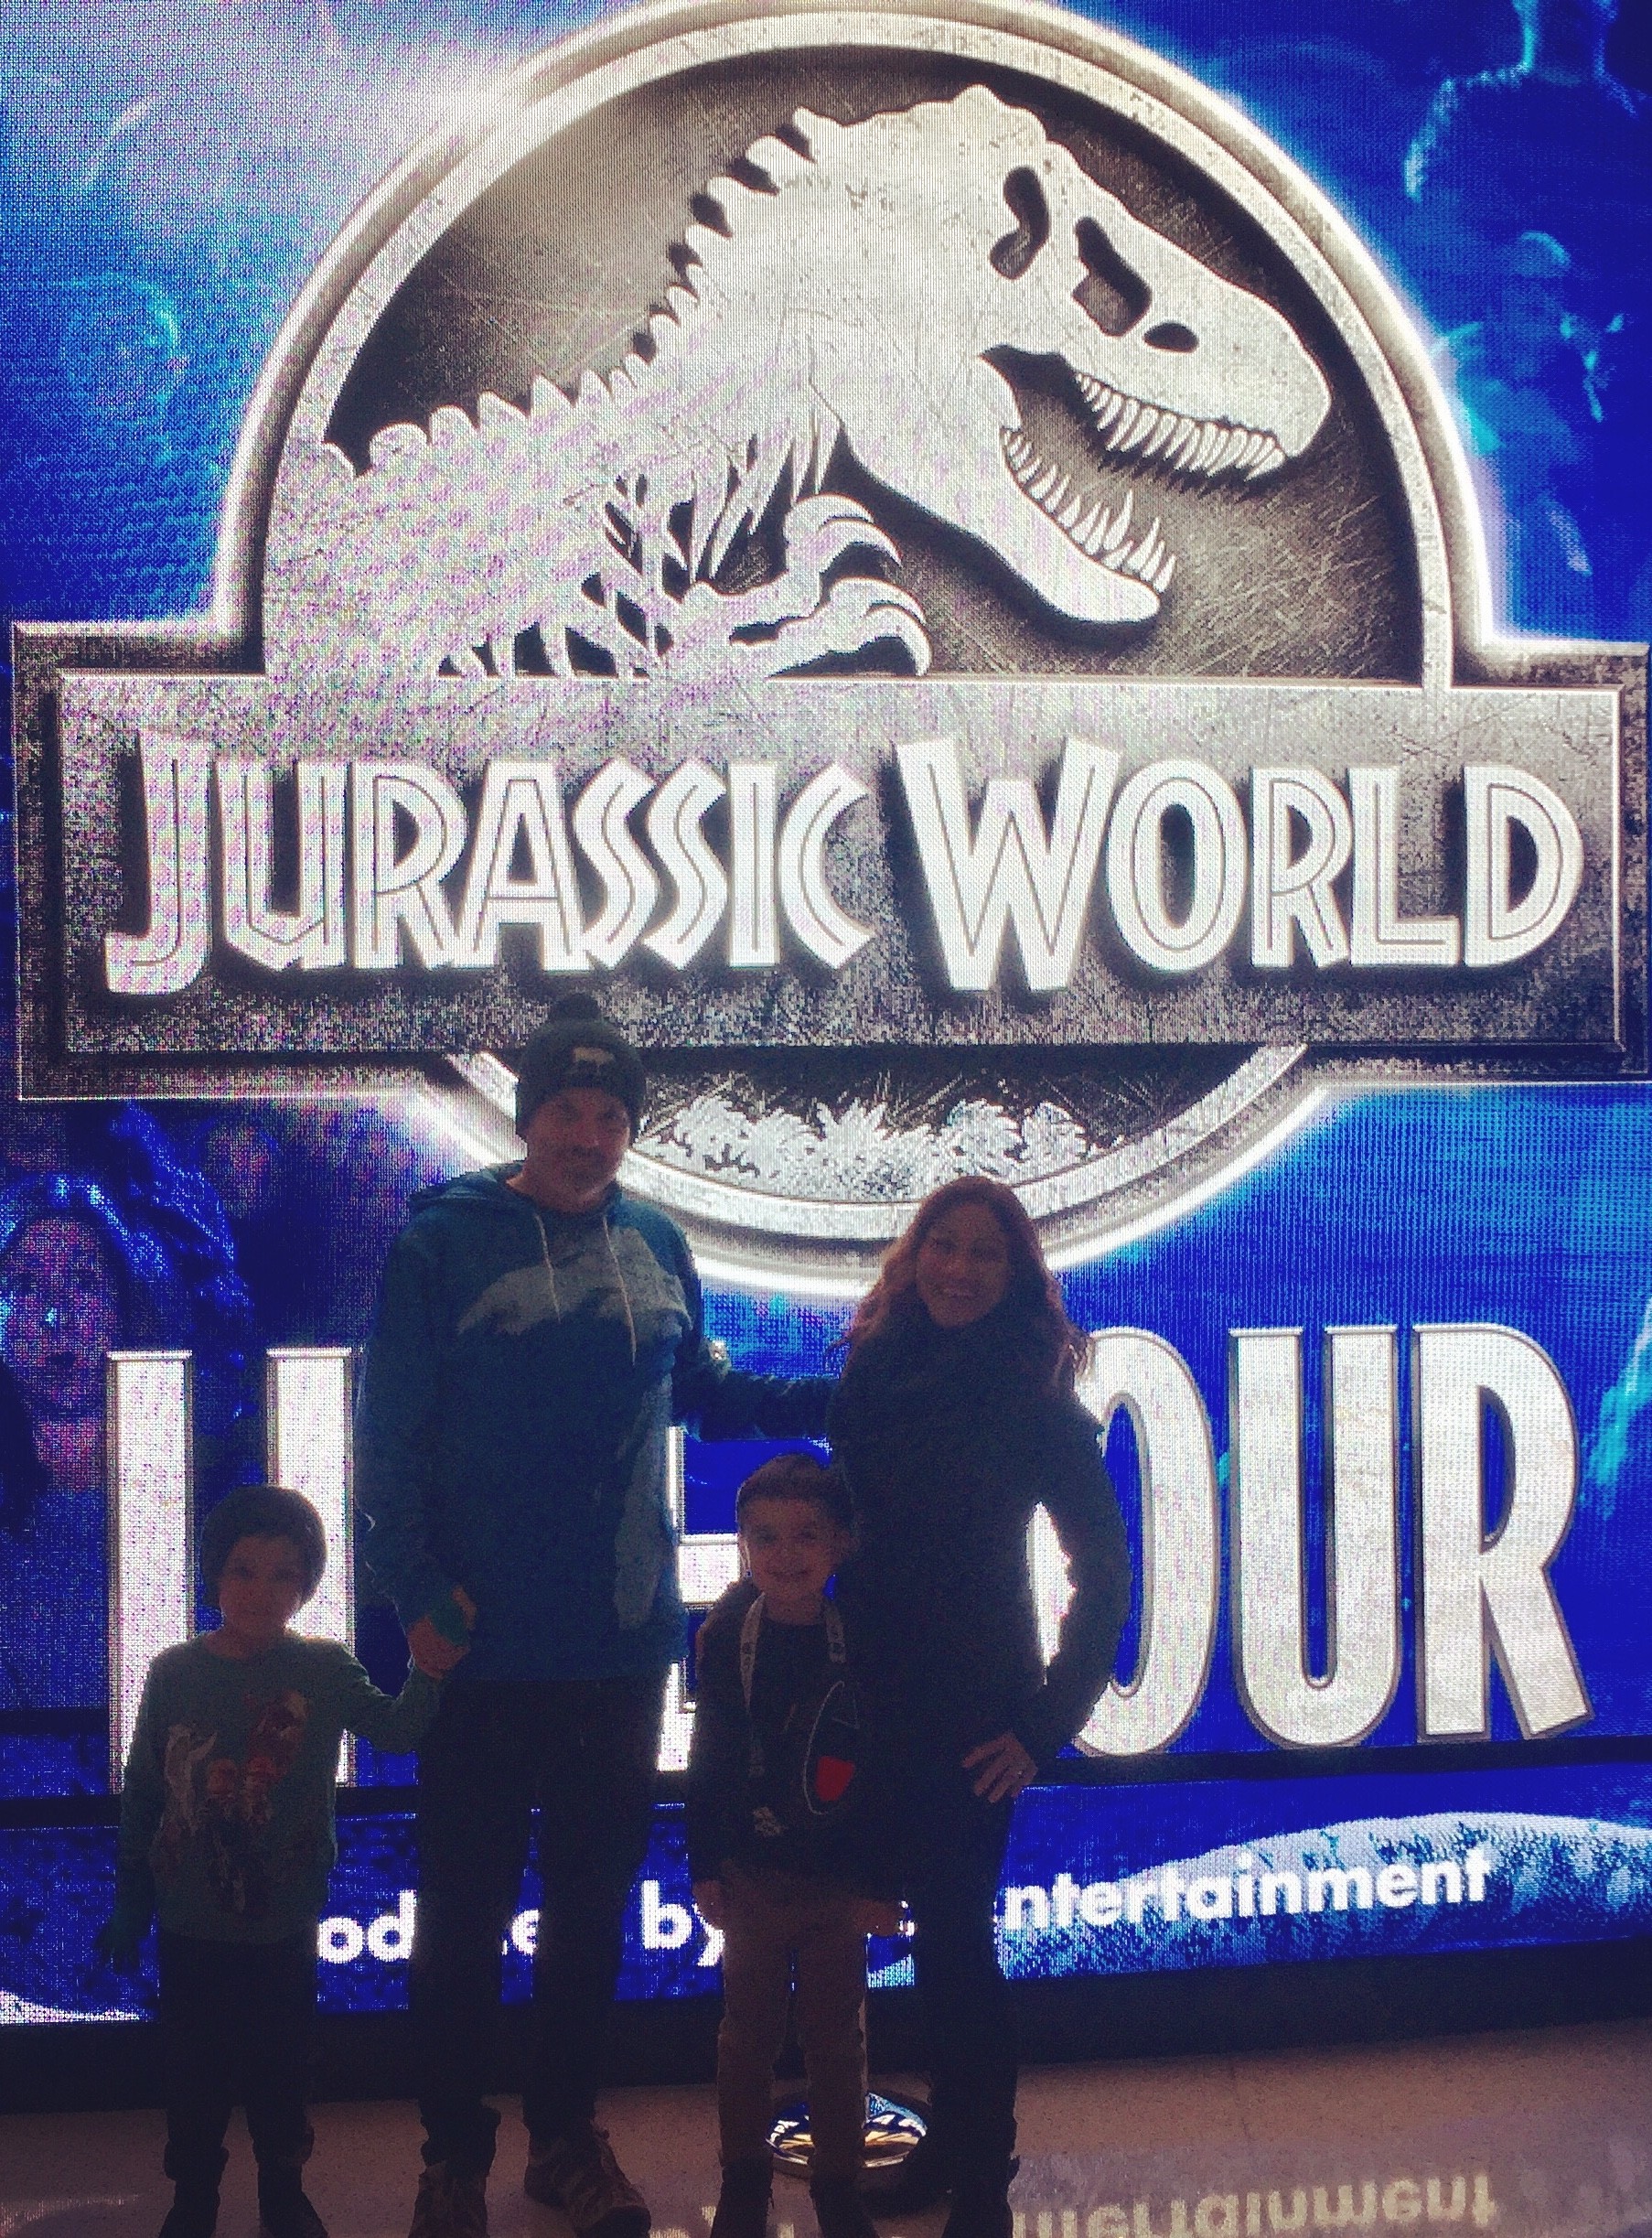 Jurassic World Live tour coming to Milwaukee's Fiserv Forum November